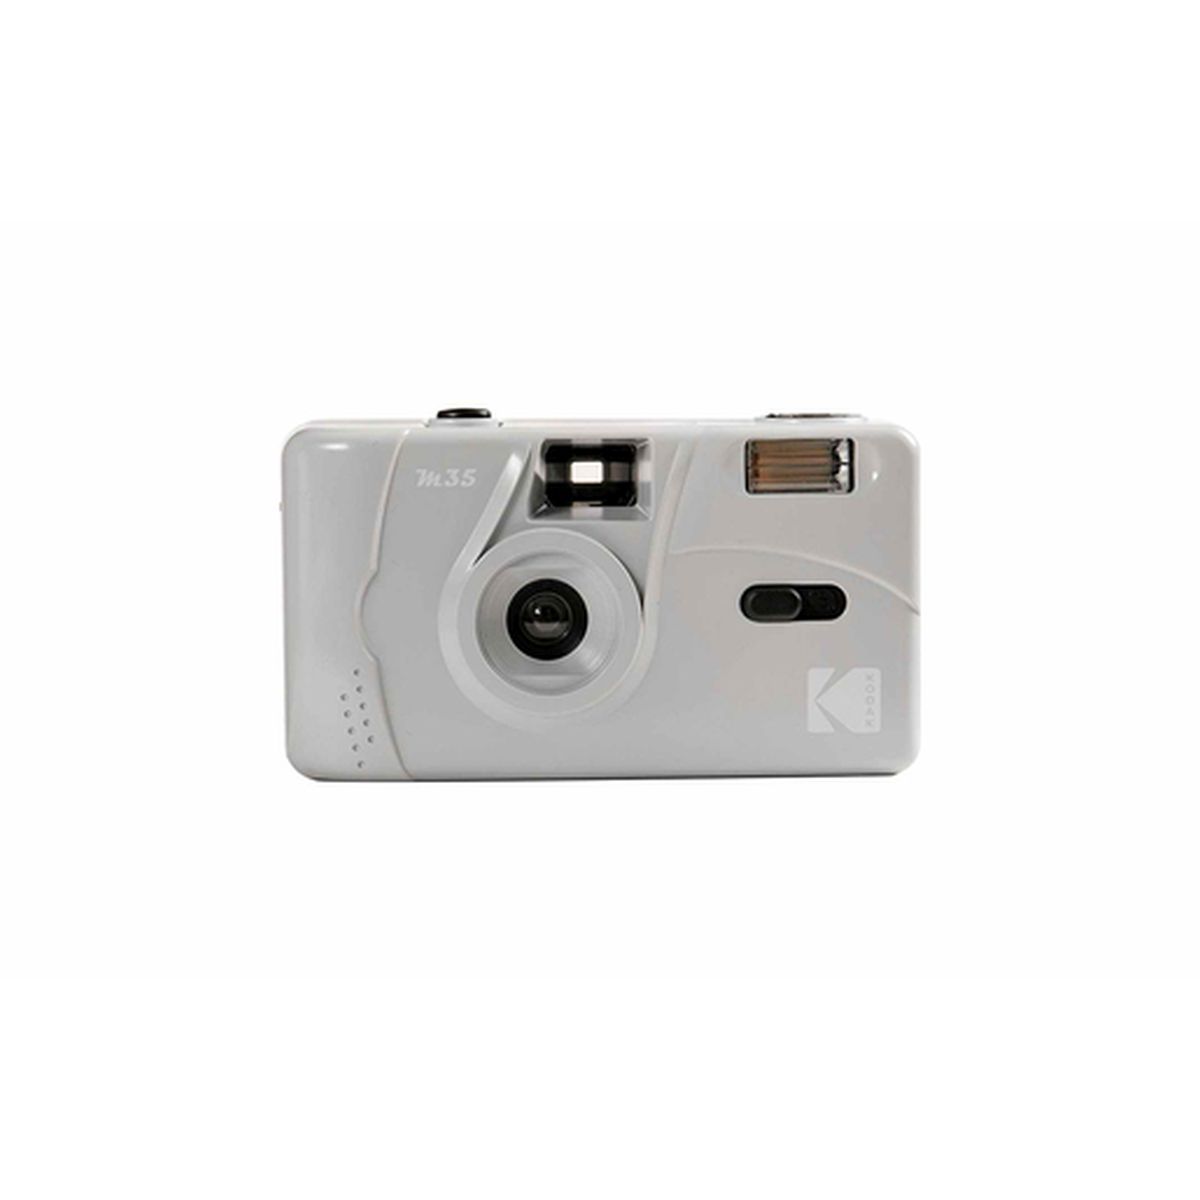 Kodak Film Kamera M35 Marble Grey analoge Kleinbildkamera